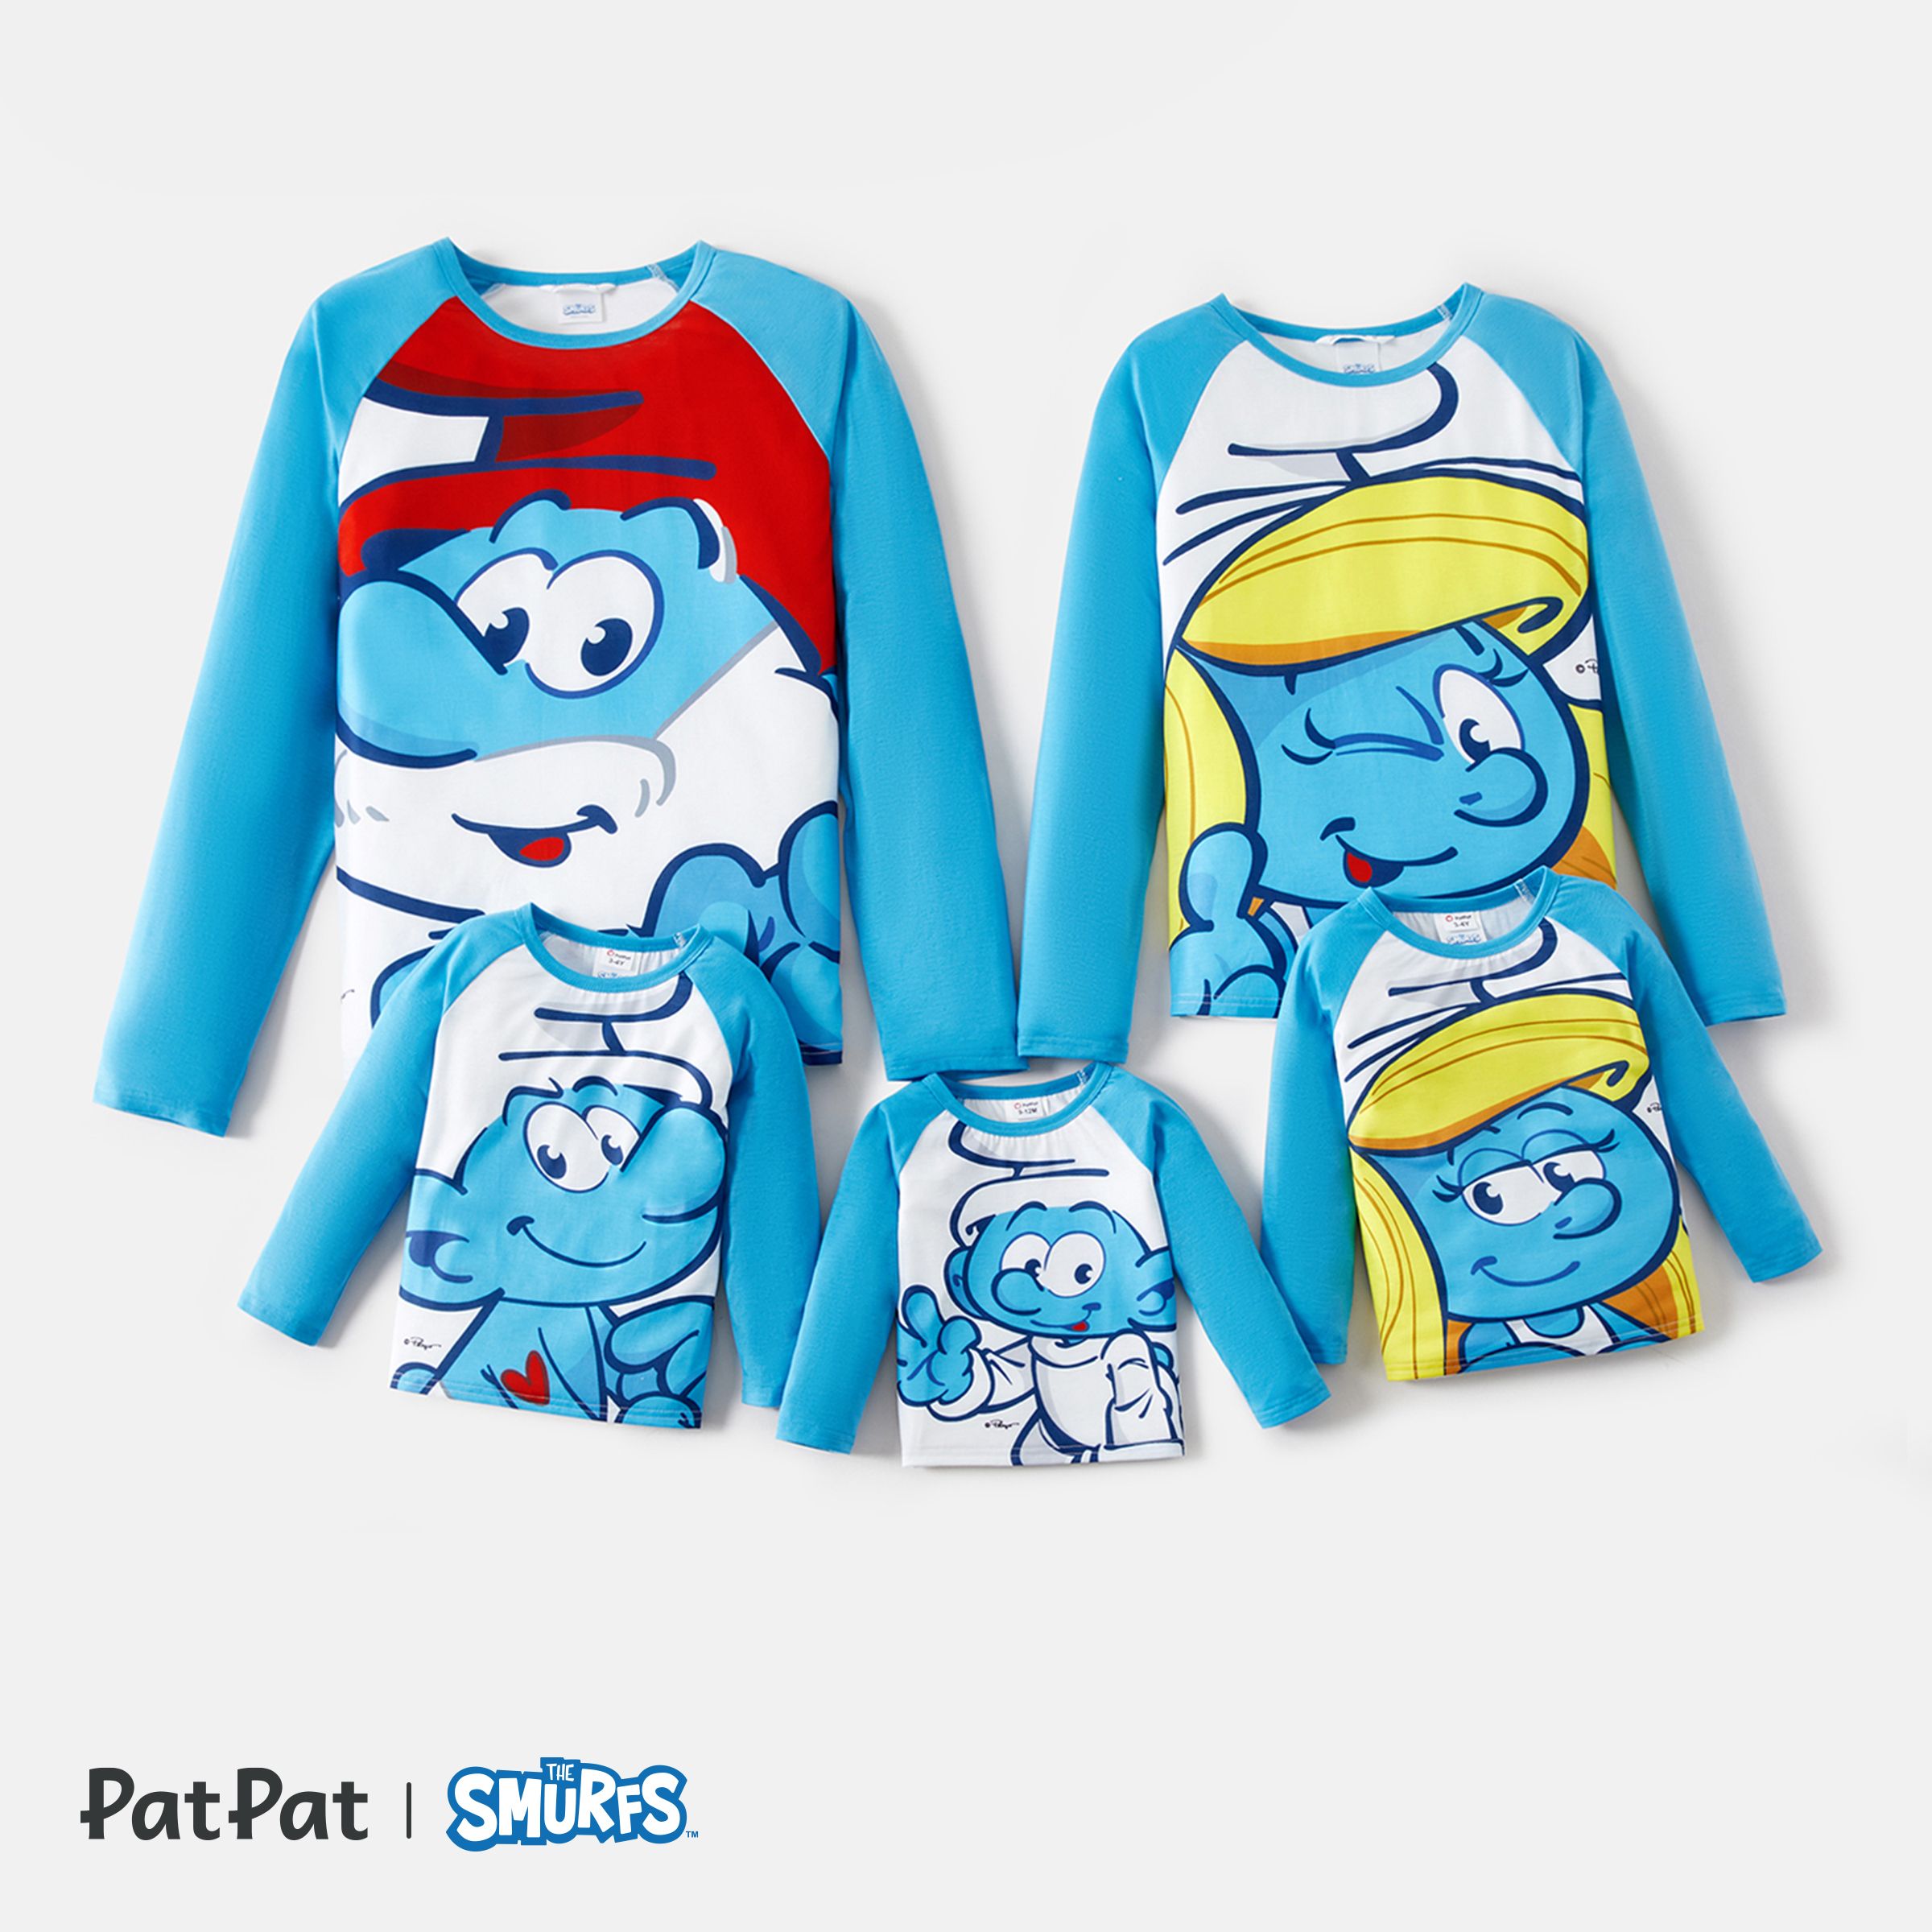 Smurfs Boss Colorblock Family Matching Pajamas Set(Flame Resistant)